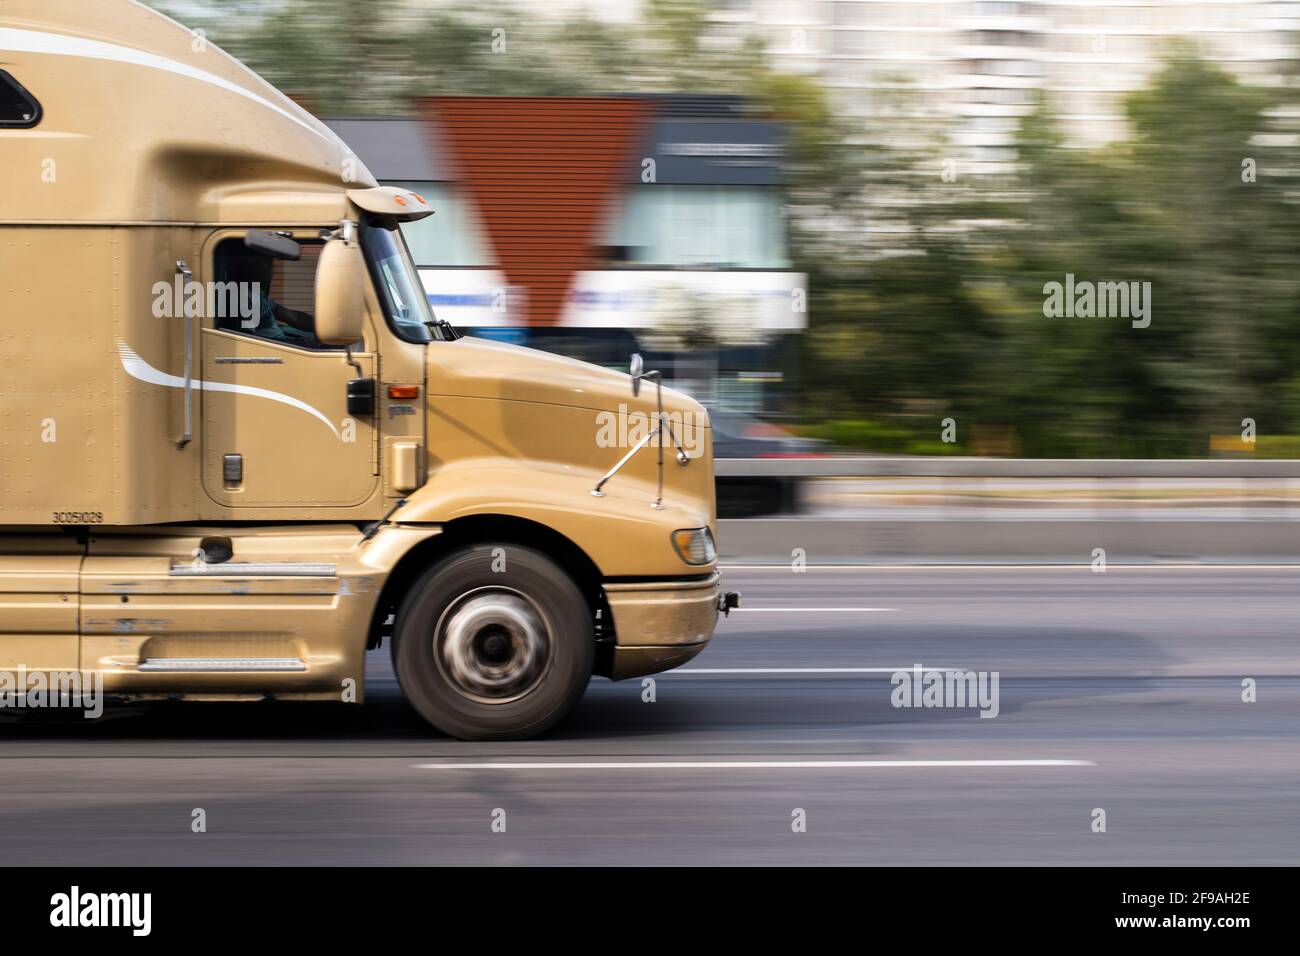 Ukraine, Kyiv - 24 September 2020: Yellow Truck moving on the street Stock Photo